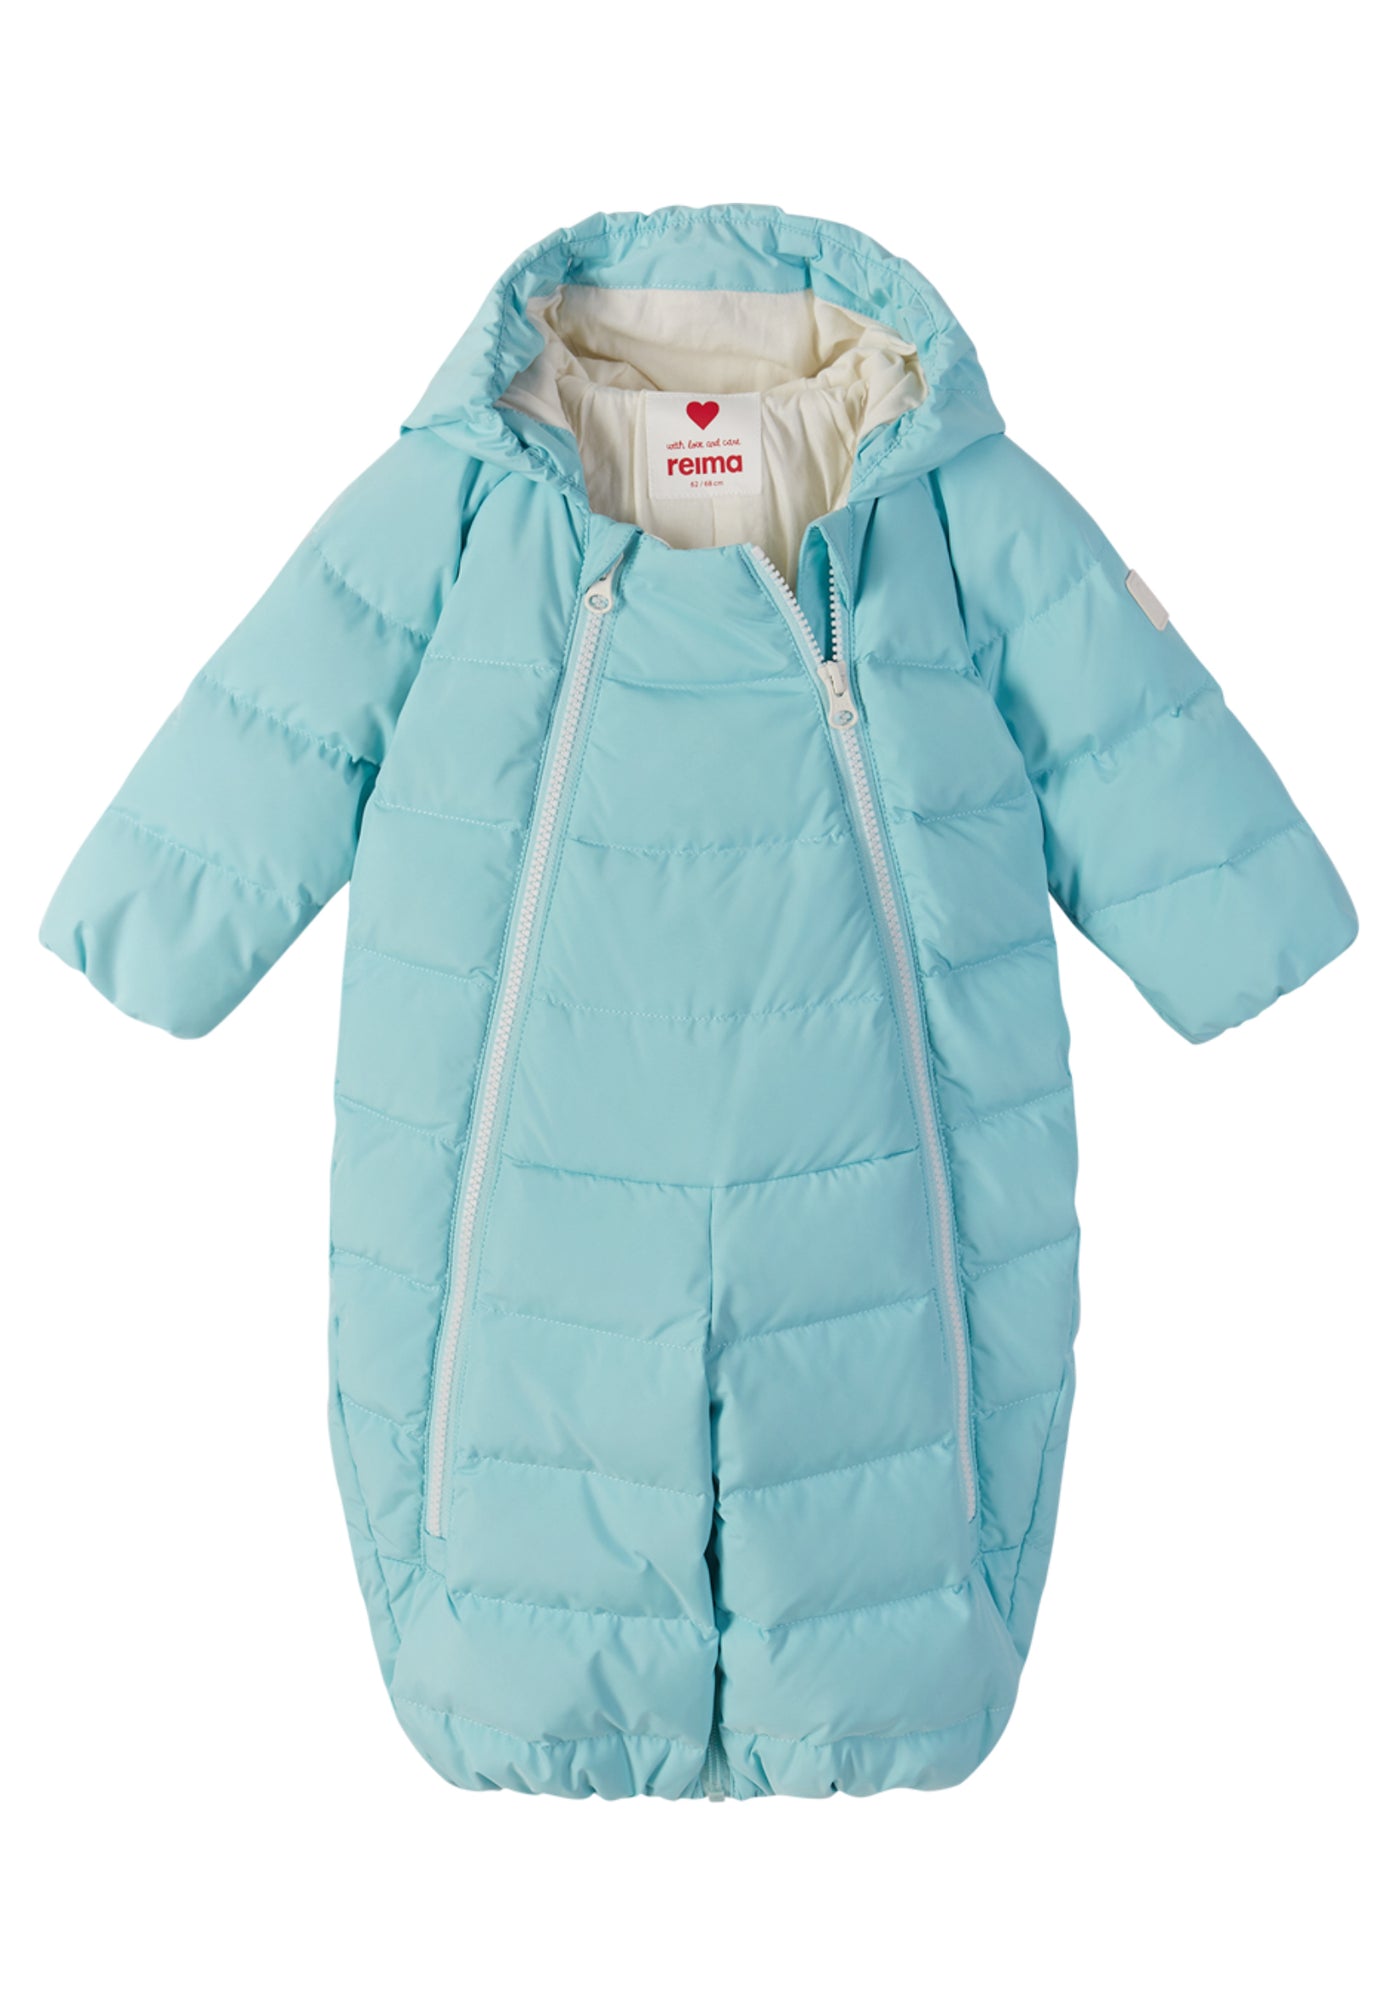 Reima Tilkkanen Down Snow Overall Sleeping Bag